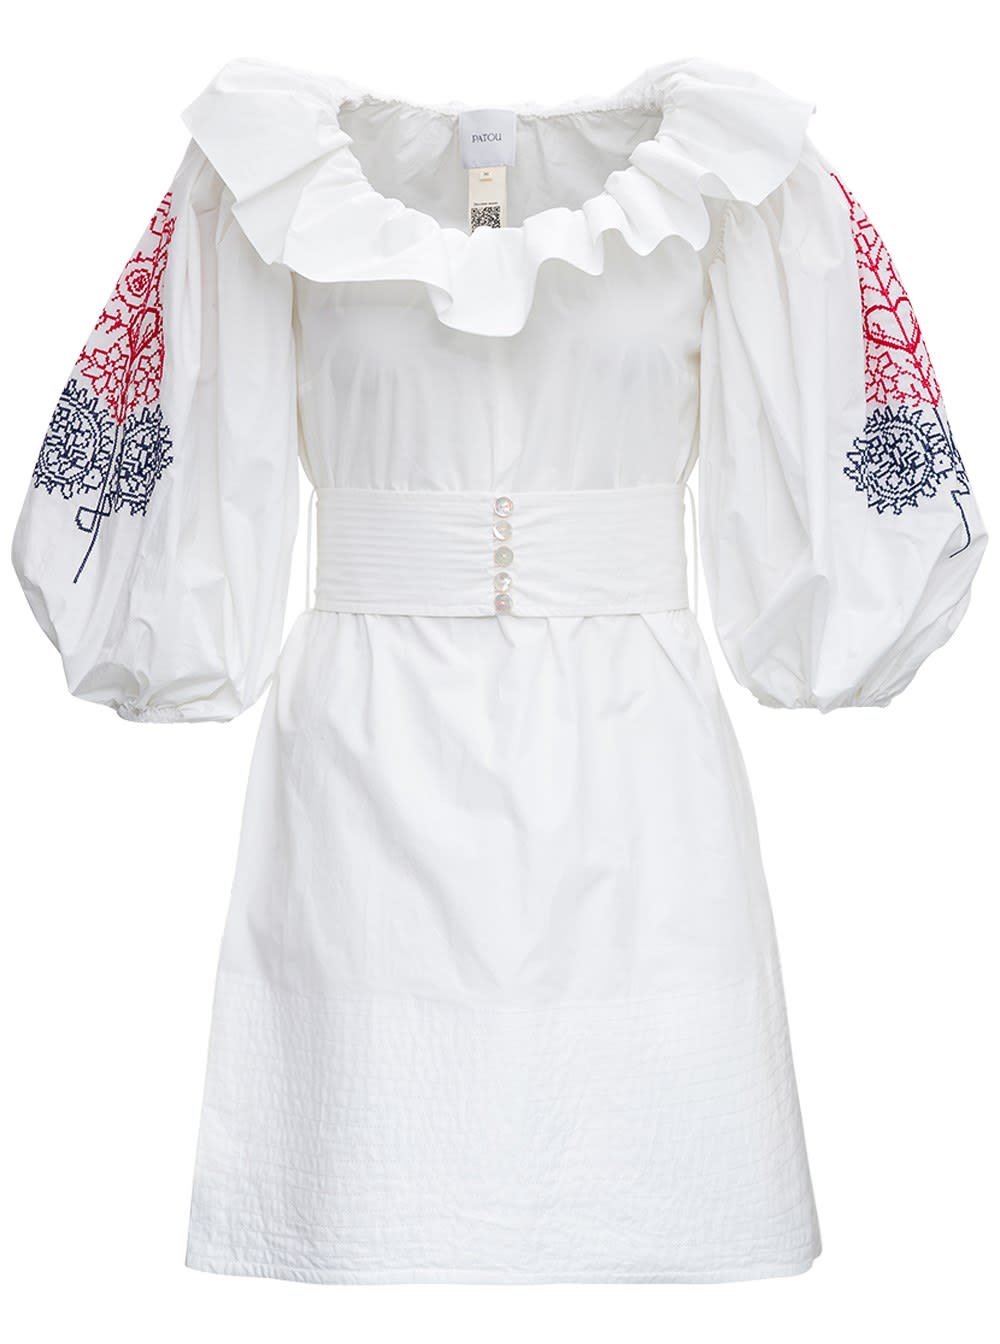 Patou Volume Embroidered Cotton Dress